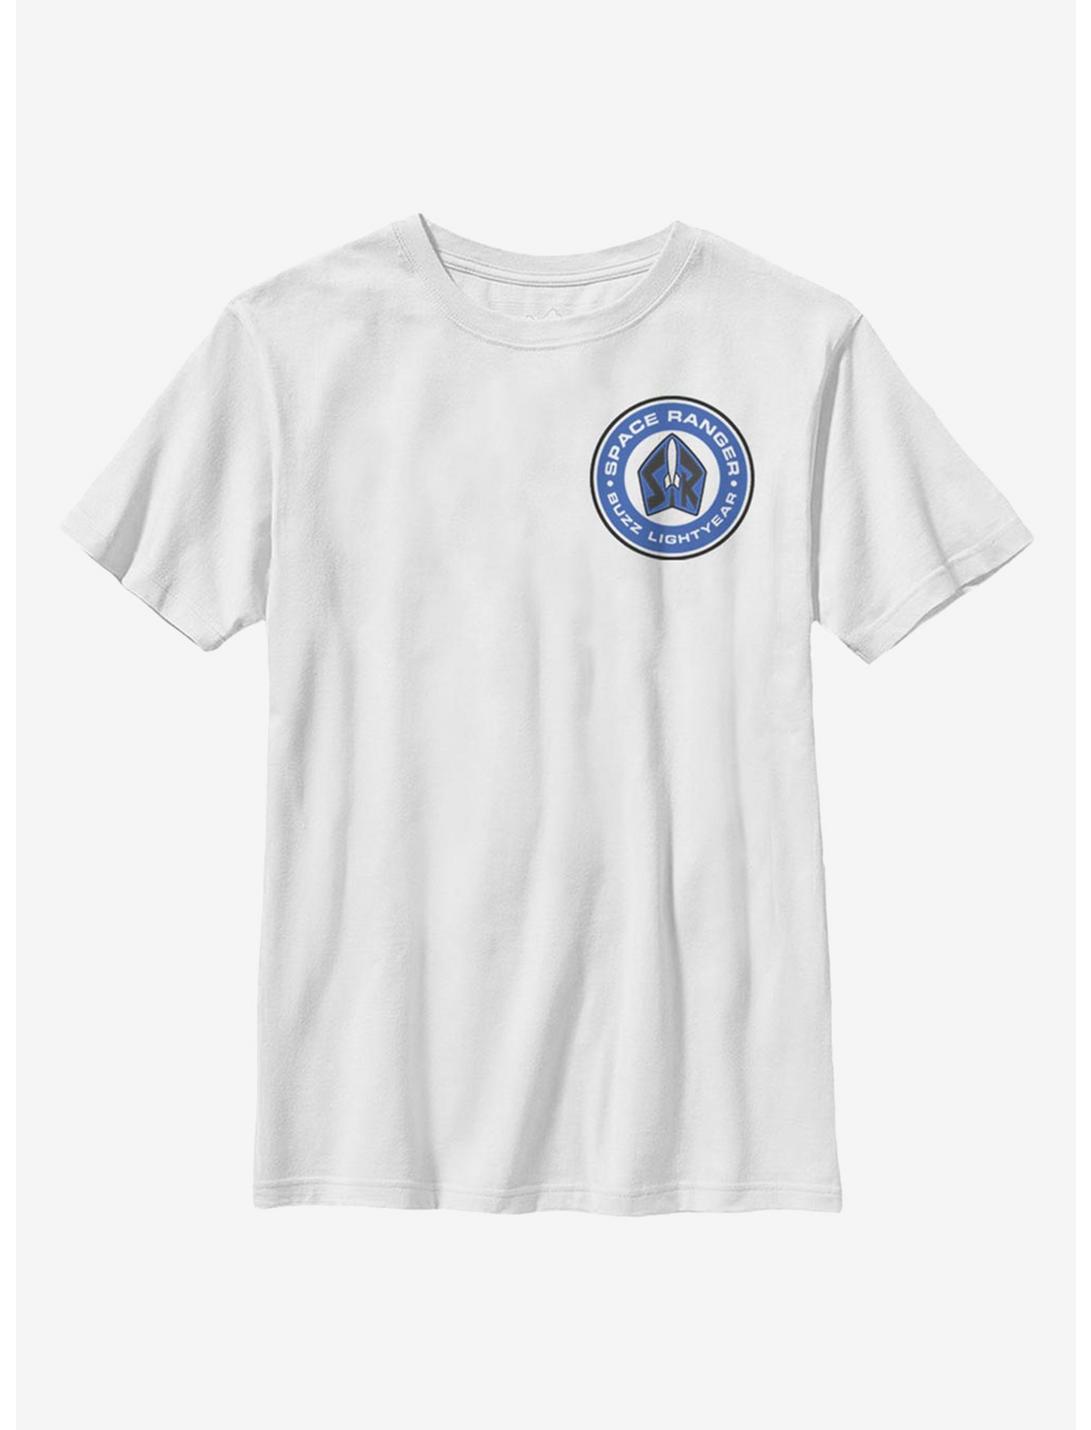 Disney Pixar Toy Story 4 Space Rangers Youth T-Shirt, WHITE, hi-res